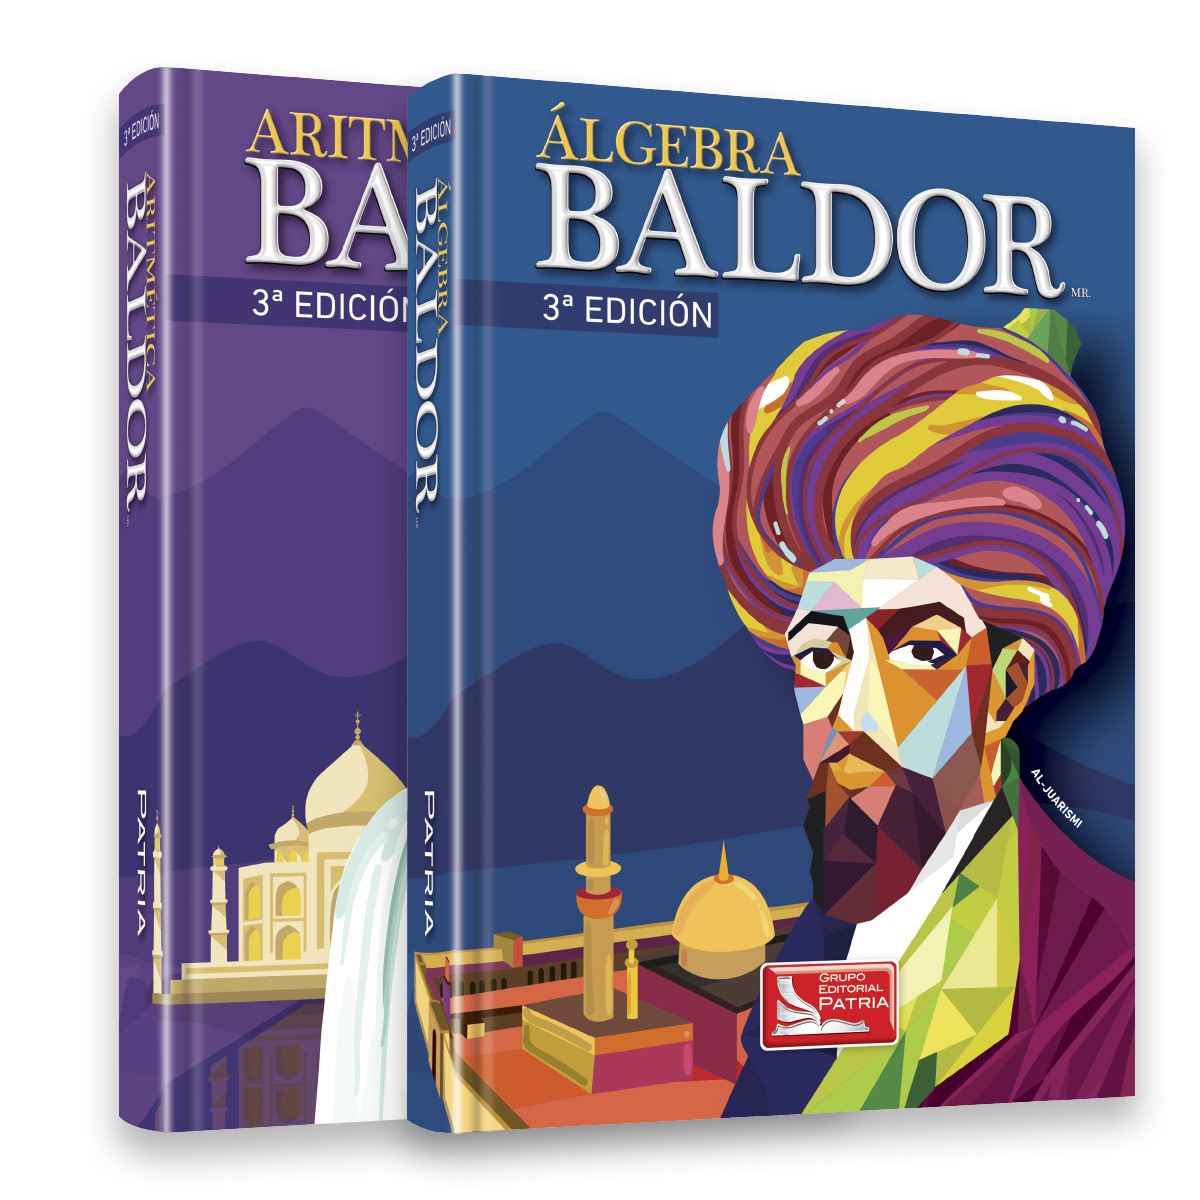 Algebra Baldor 4 Edicion Pdf Gratis Algebra De Baldor En Pdf Libro Gratis Descarga Gratis La Coleccion De Libros Rubinos Completo En Pdf Anjinhagui